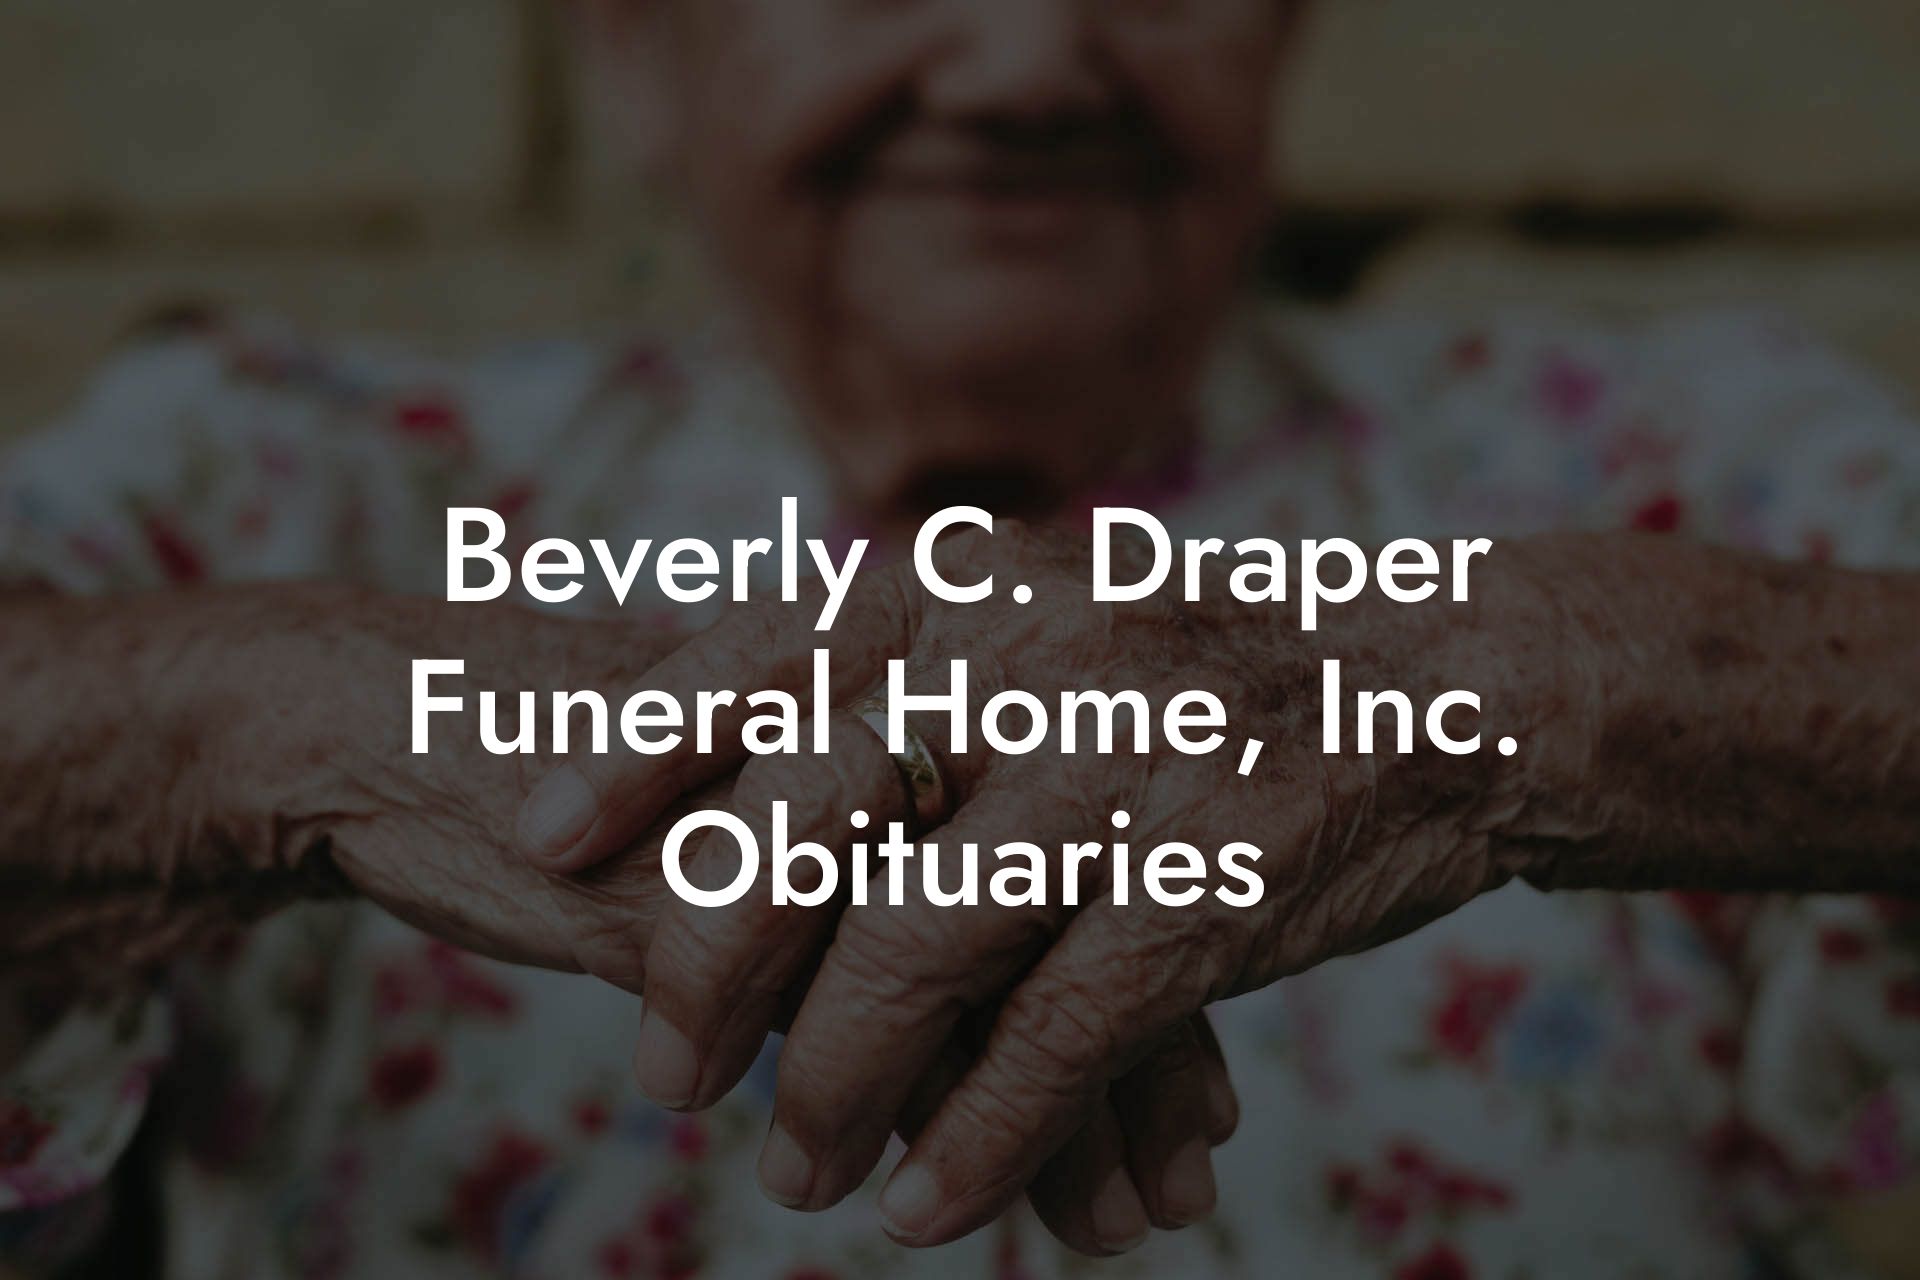 Beverly C. Draper Funeral Home, Inc. Obituaries